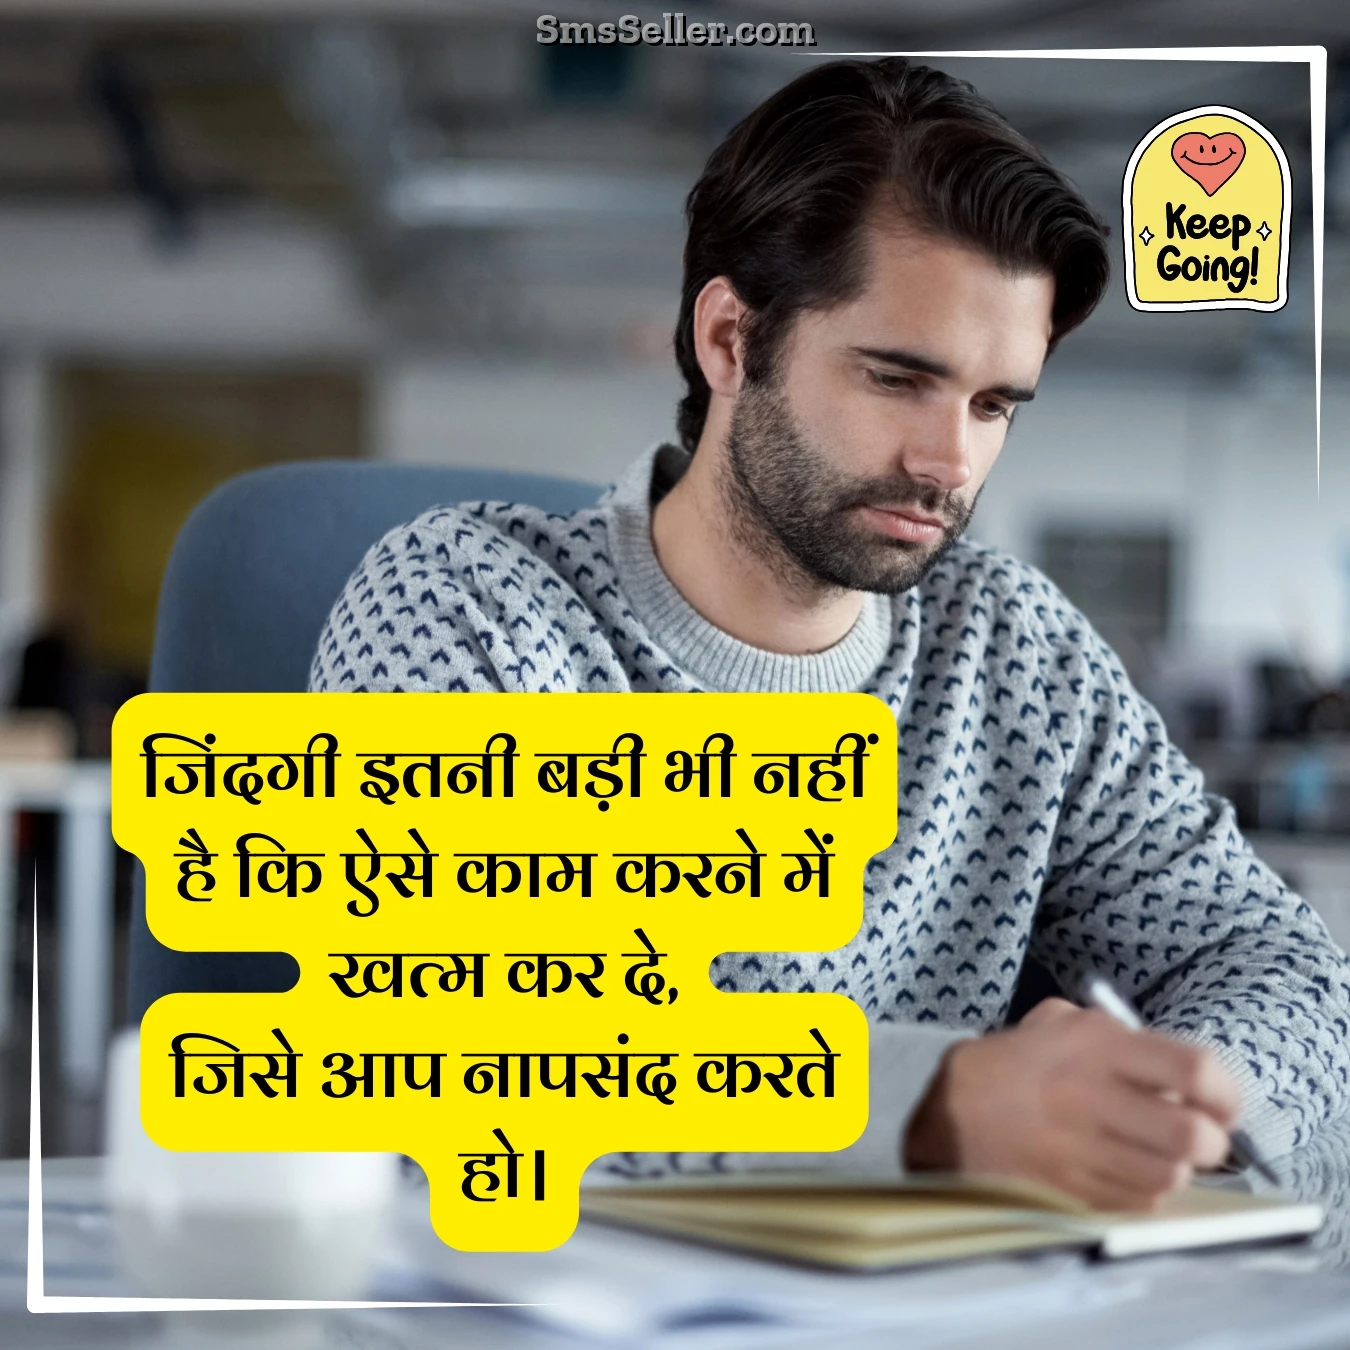 motivational quotes hindi life perspective jindagee itanee badee